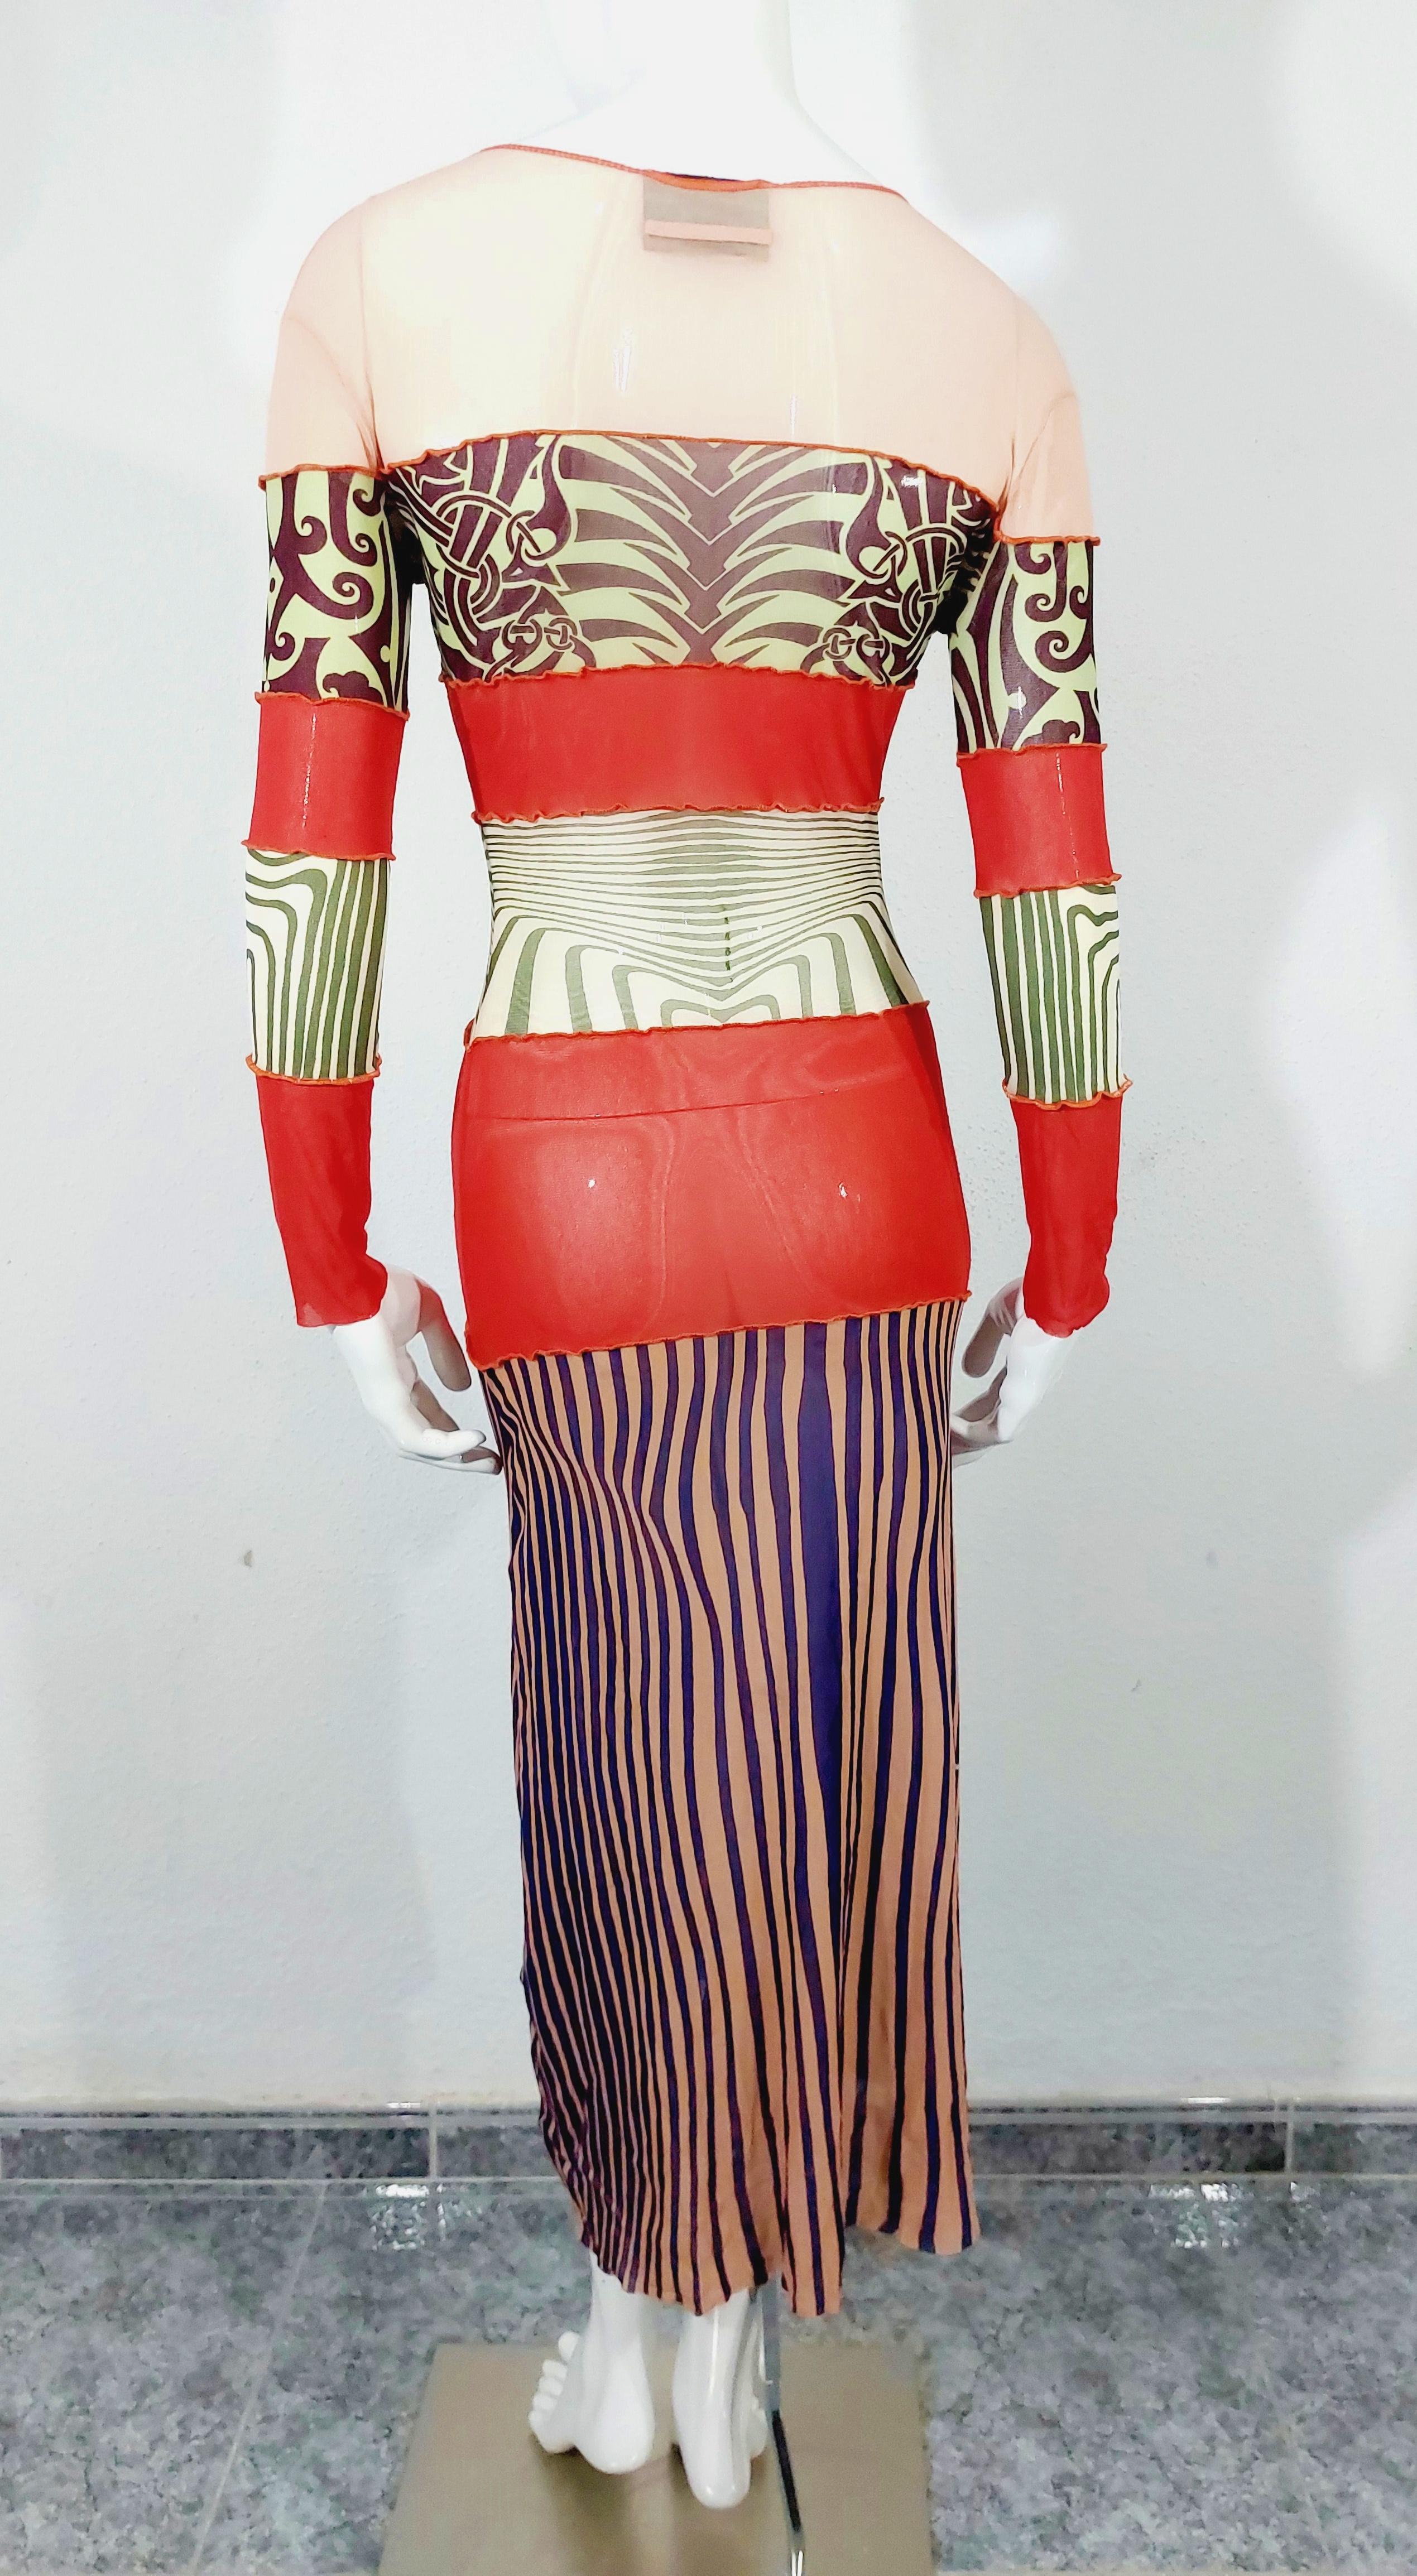 Jean Paul Gaultier Optical Illusion Nude Ethic Trompe l'oeil Vanessa Guide Dress For Sale 6